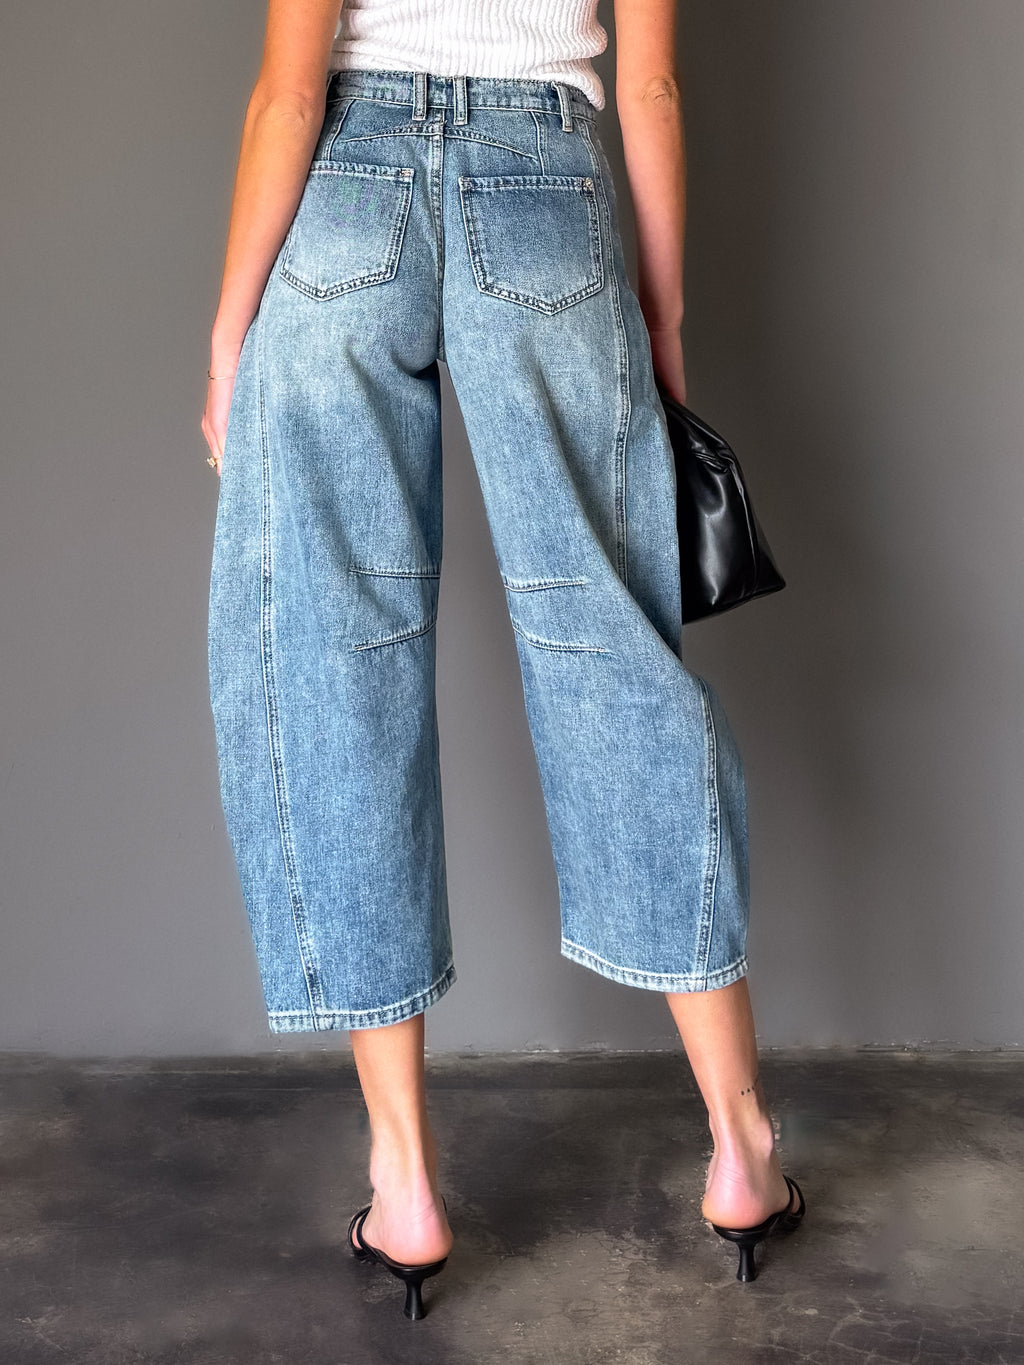 Noah Barrel Jeans in Denim - Stitch And Feather